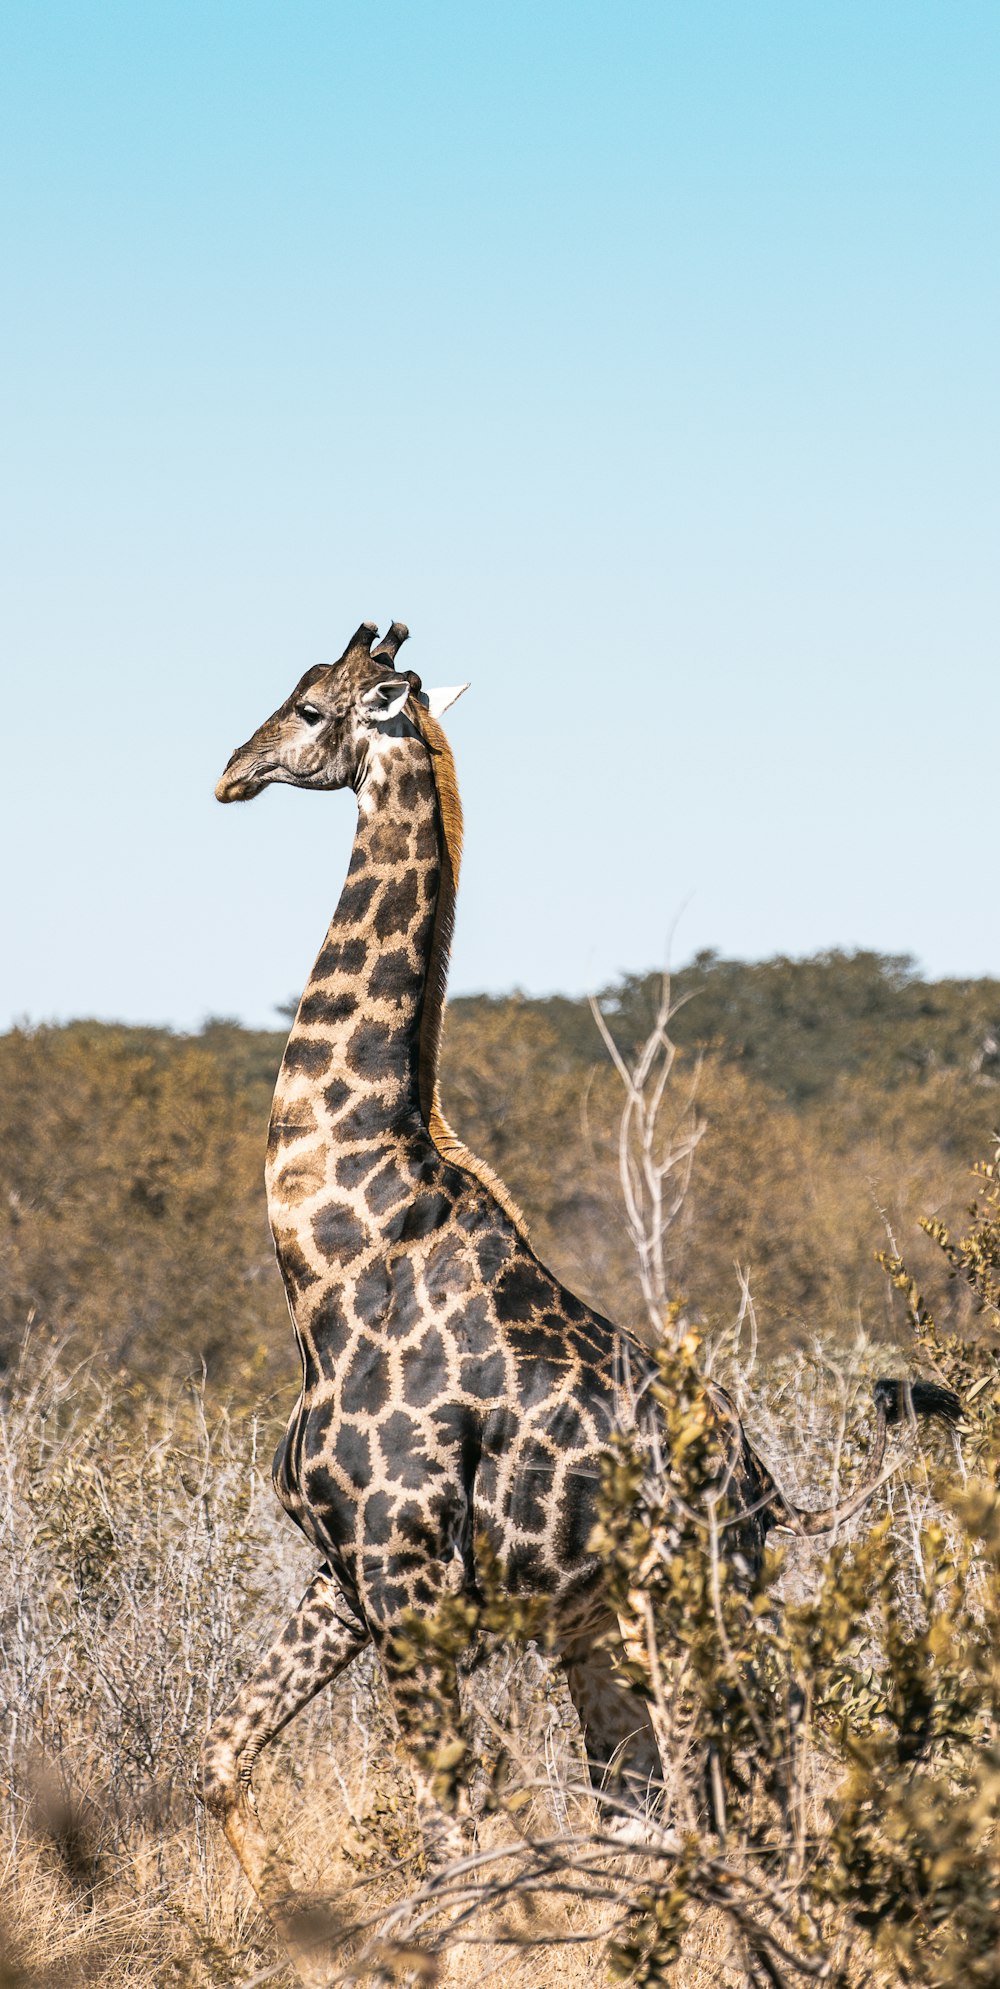 giraffe on brown grass field during daytime